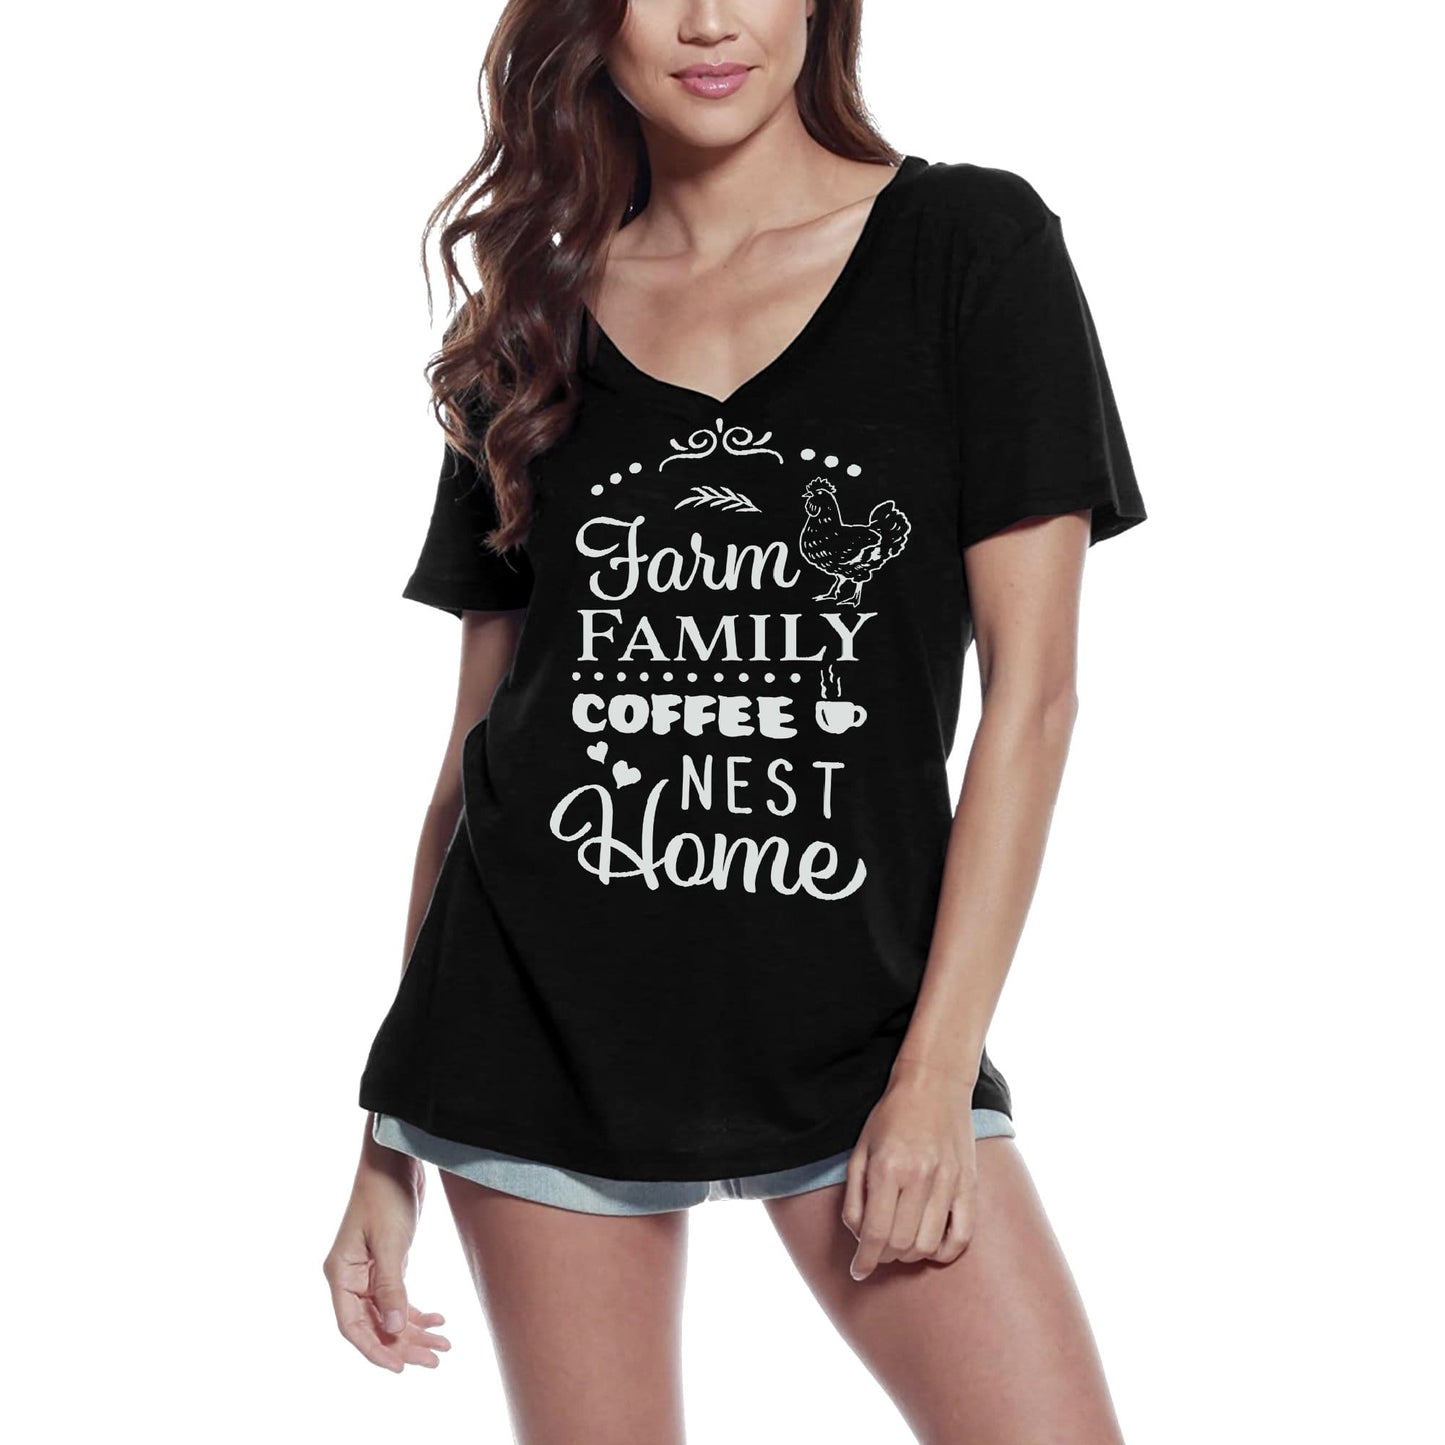 ULTRABASIC Women's T-Shirt Farm Family Coffee Nest Home - Short Sleeve Tee Shirt Tops